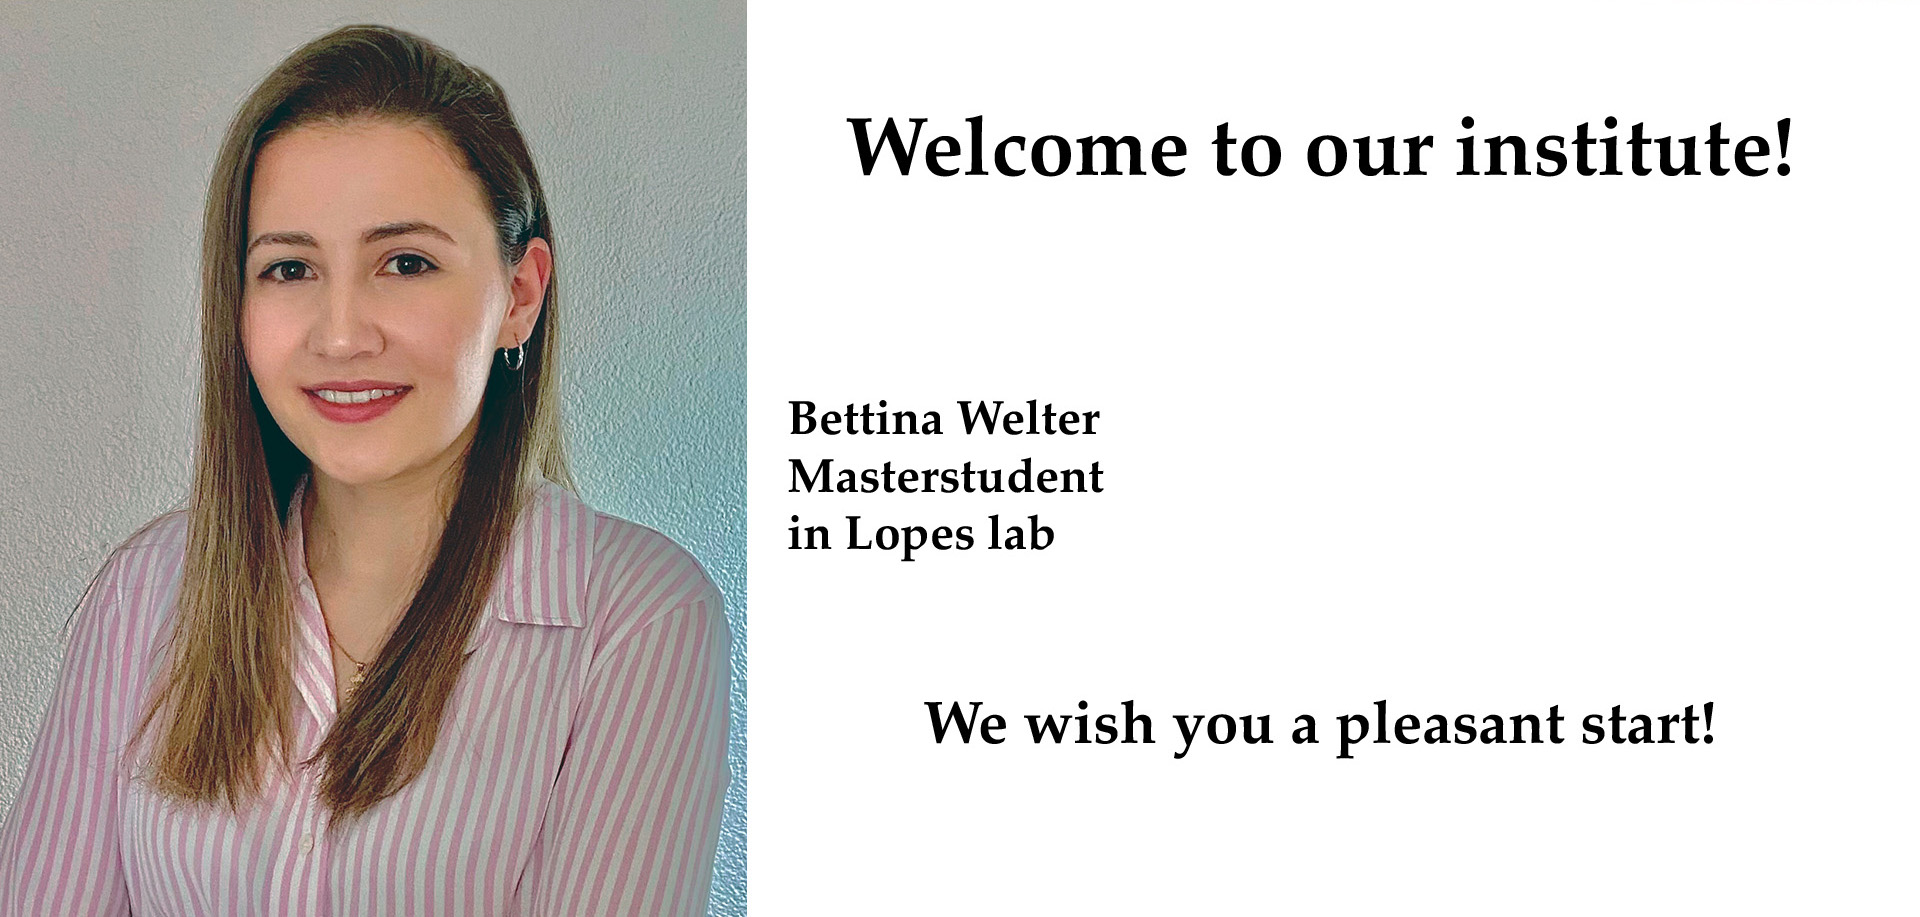 New employee Bettina Welter